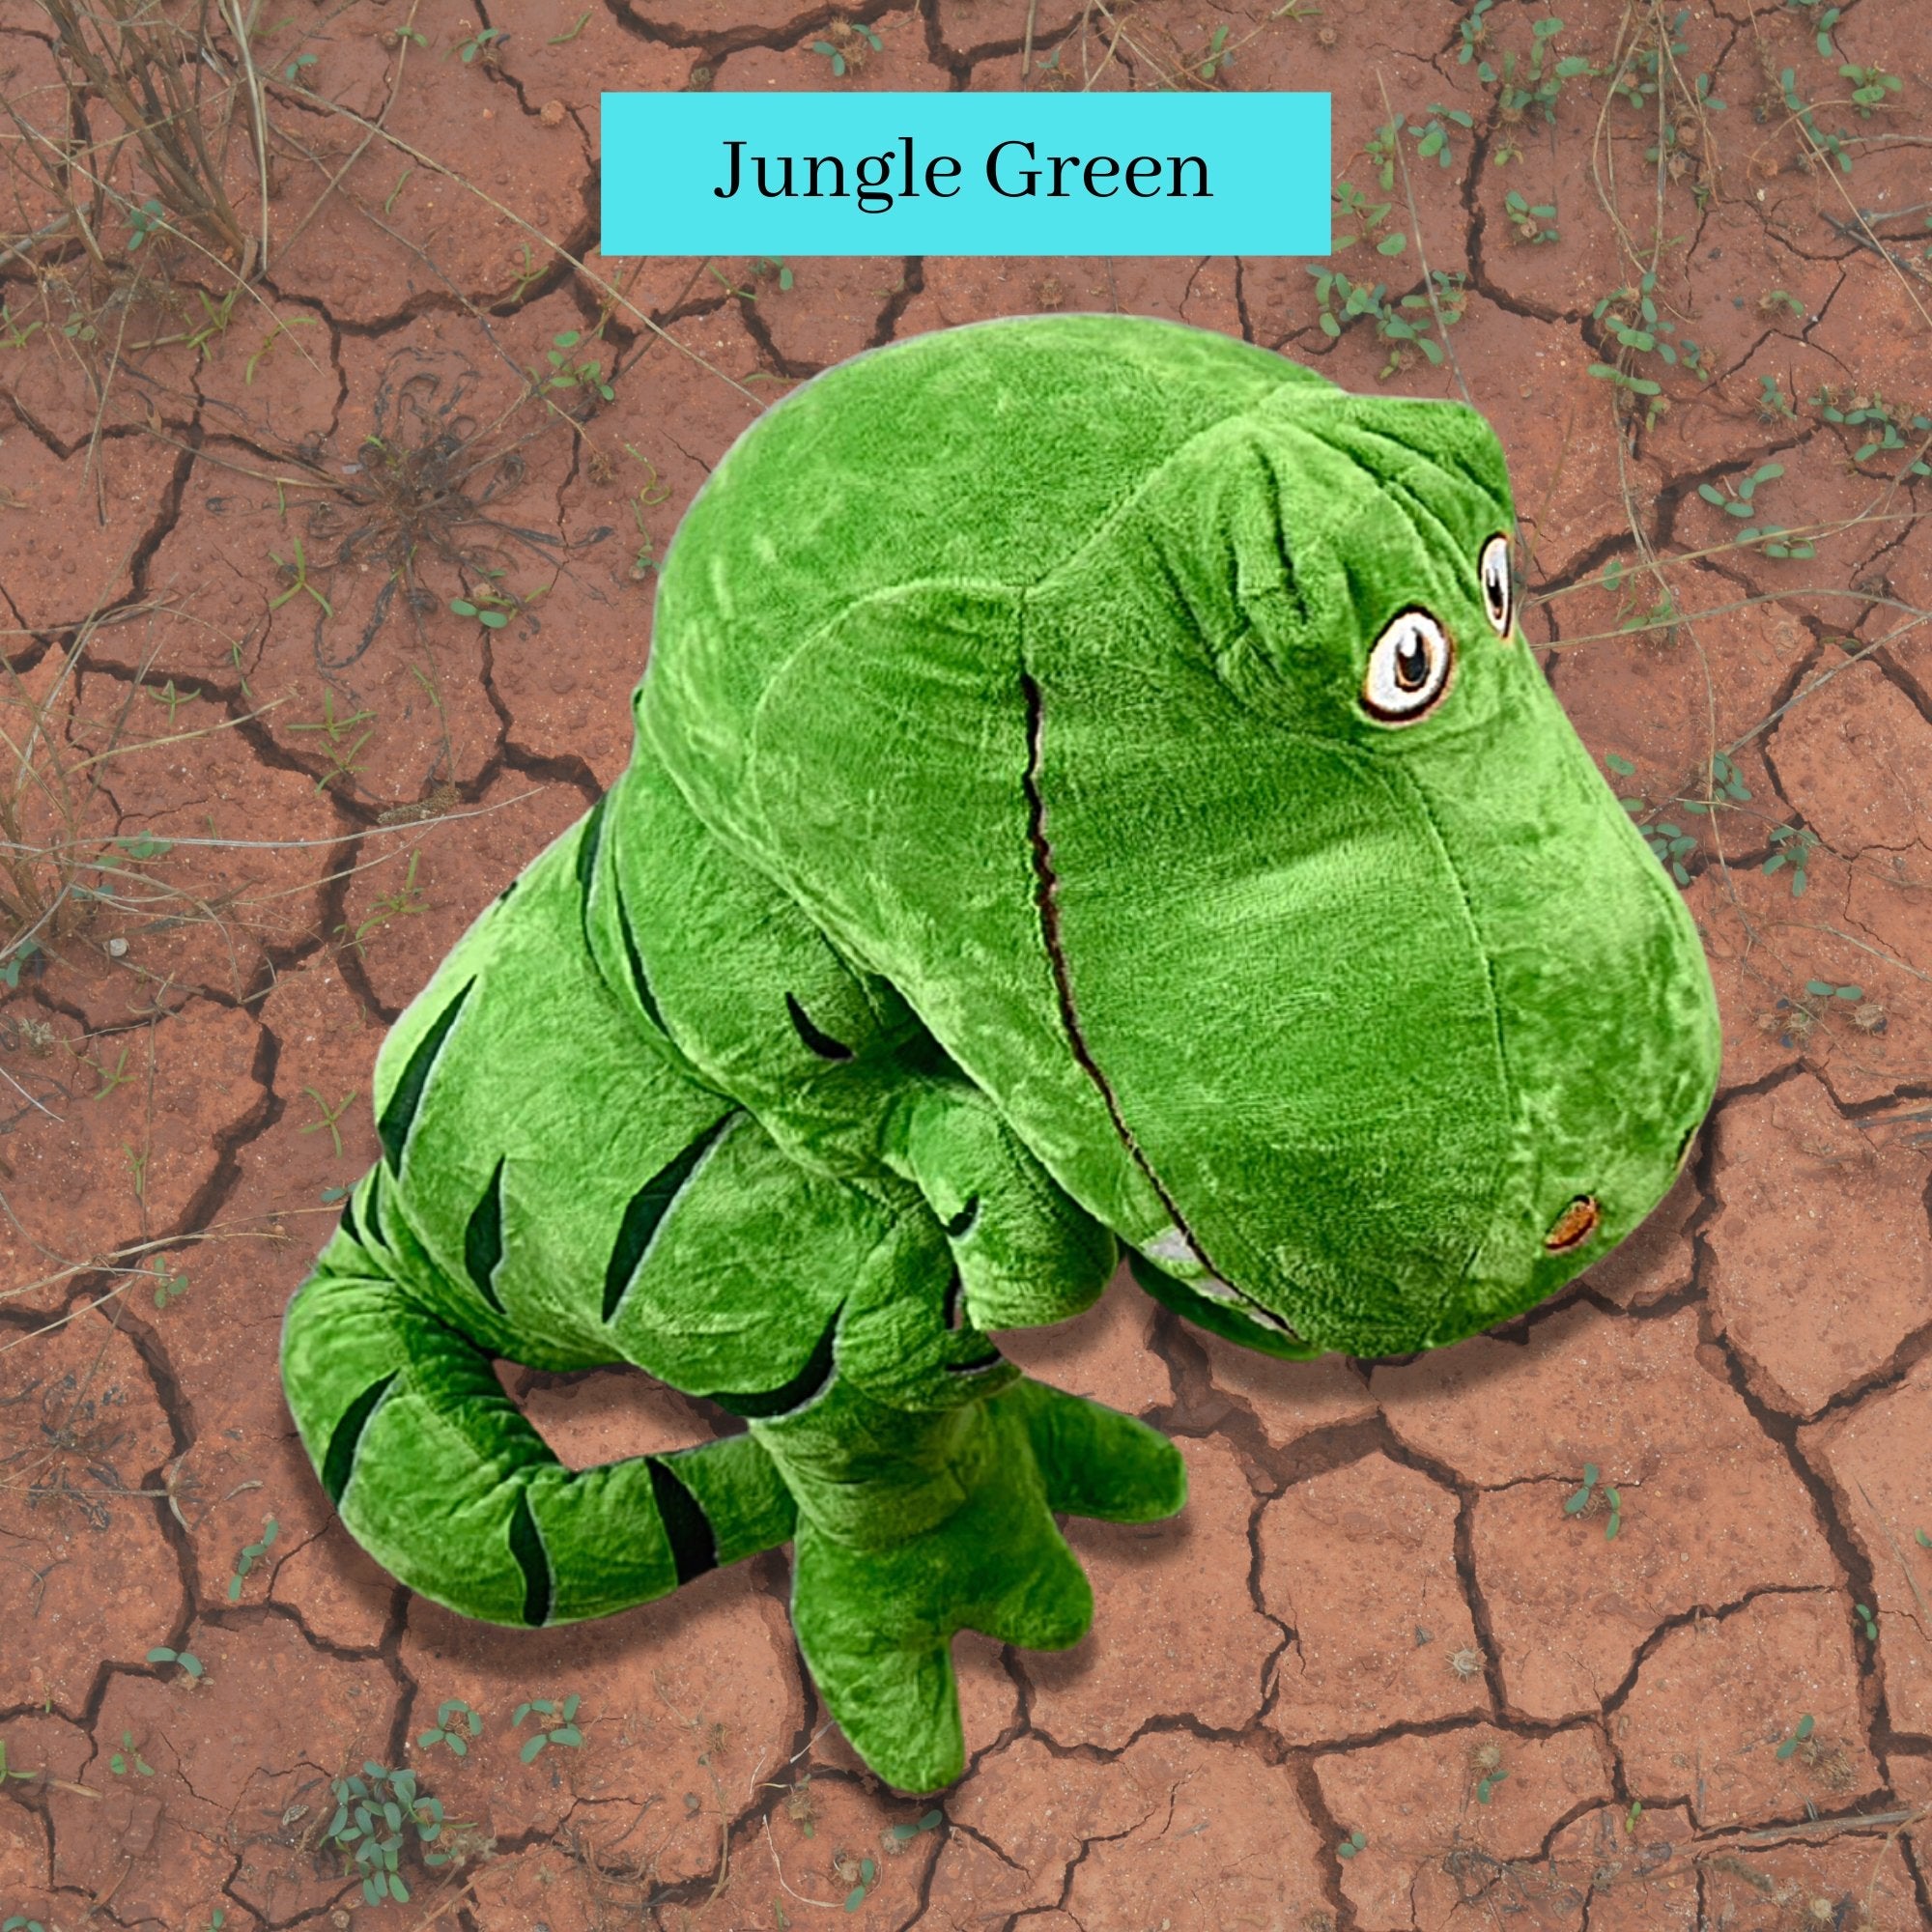 My BIG Dinosaur Plush Toy in jungle green